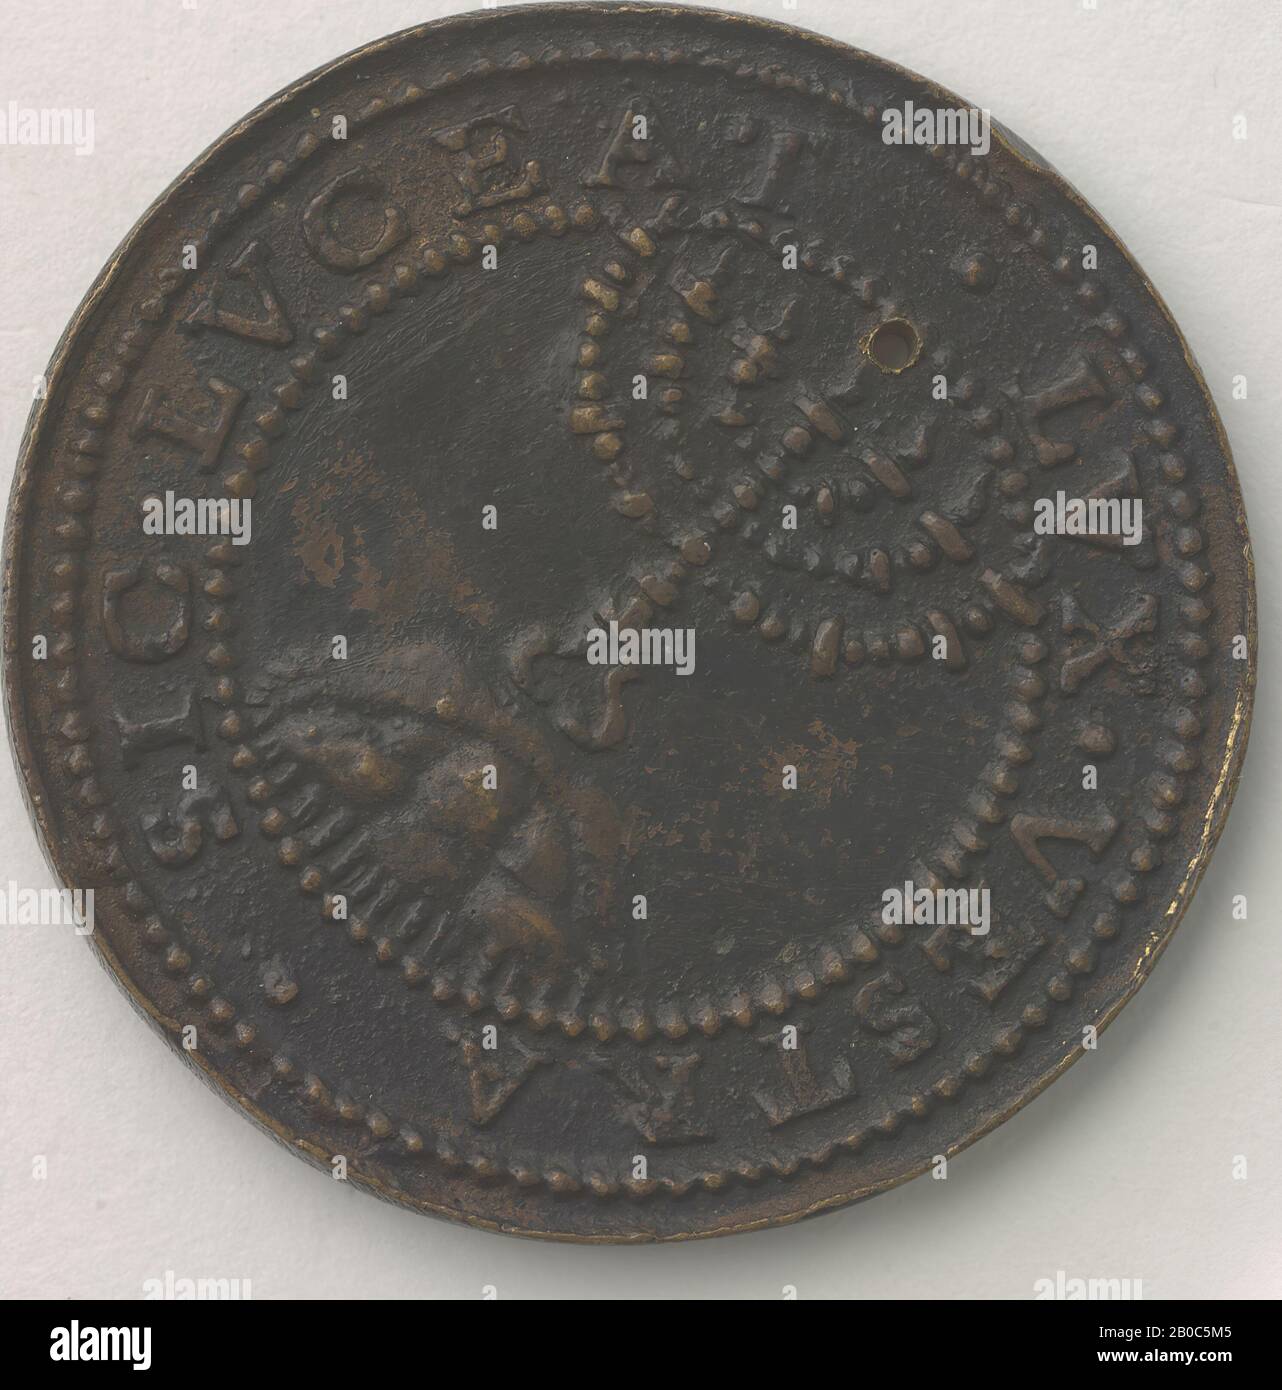 Medalist M. B., Urban VII, 1590, bronze, 1 9/16 in. (3.9 cm.) Stock Photo